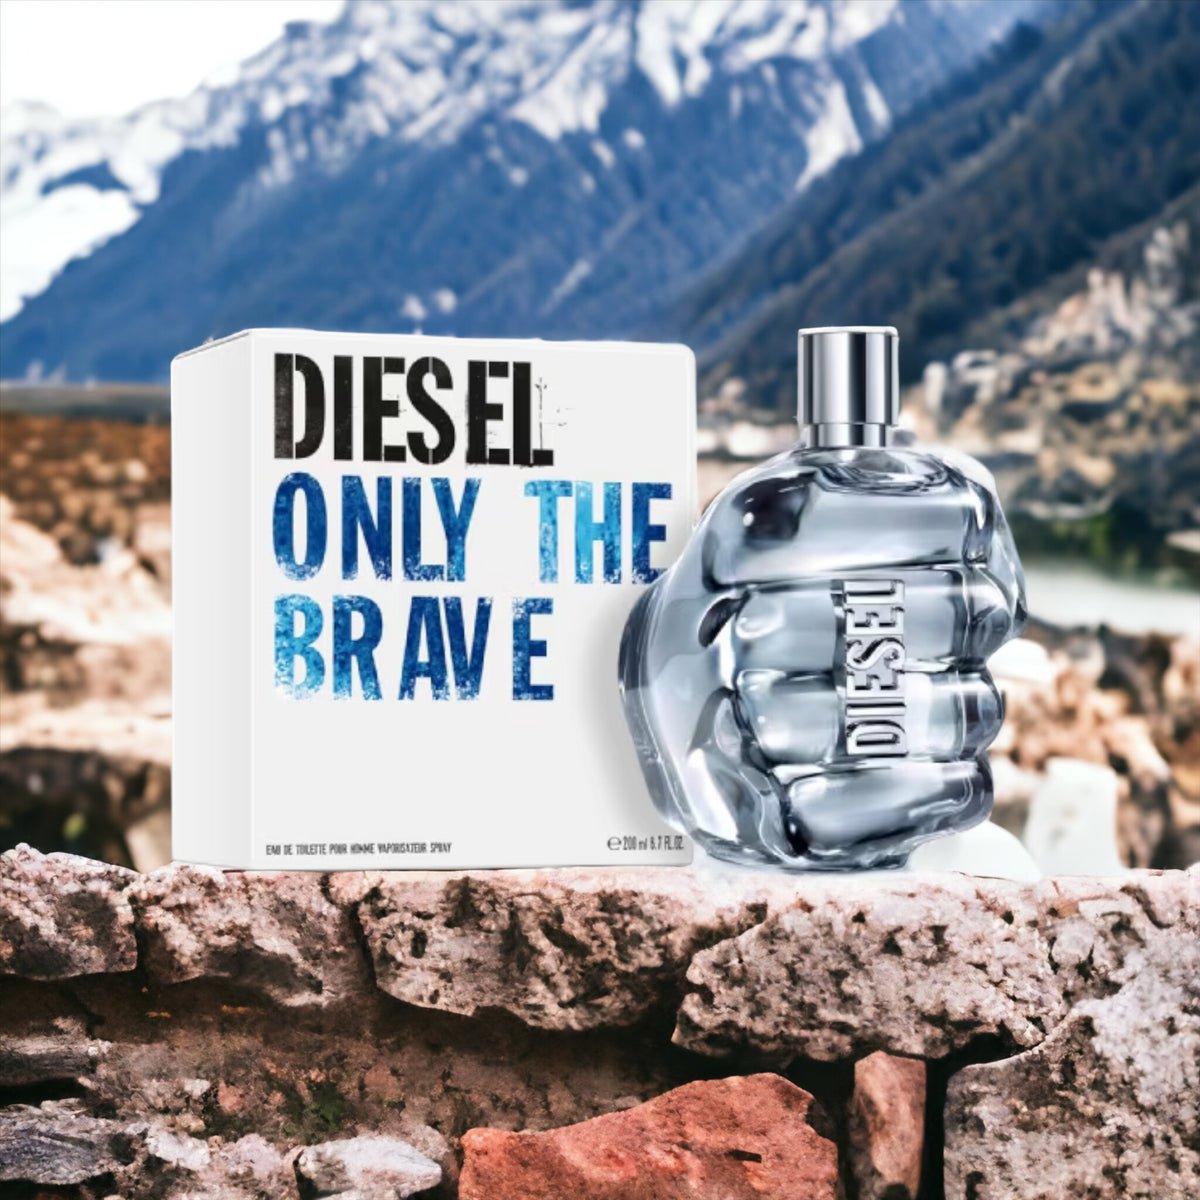 Diesel Only The Brave Shower Gel | My Perfume Shop Australia